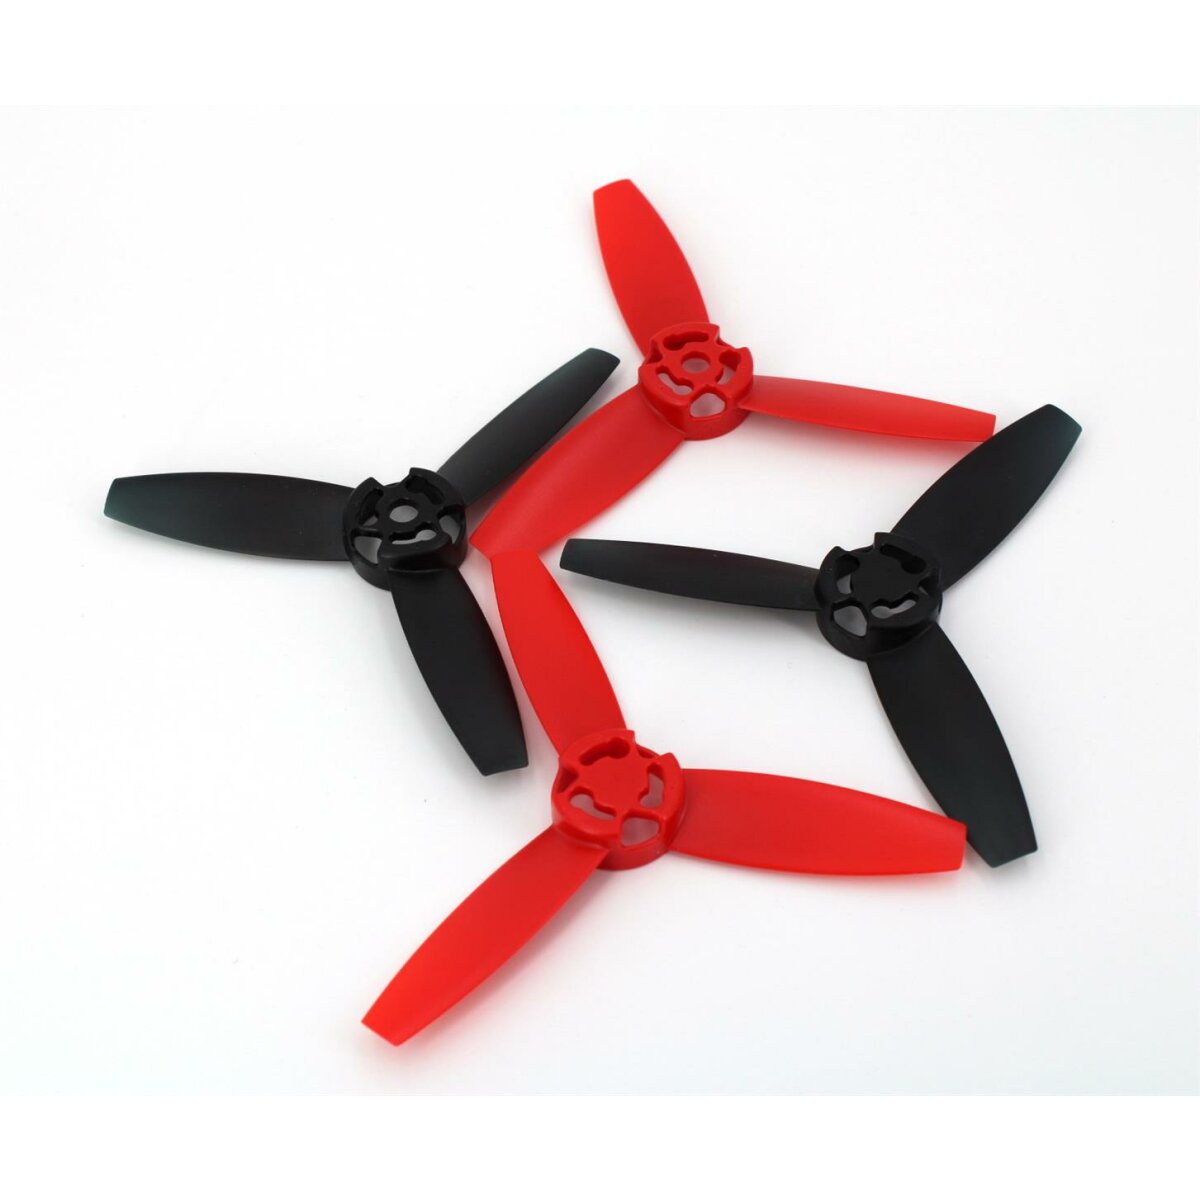 Parrot Bebop Propellers Blades Full Set of 4  Red and Black 